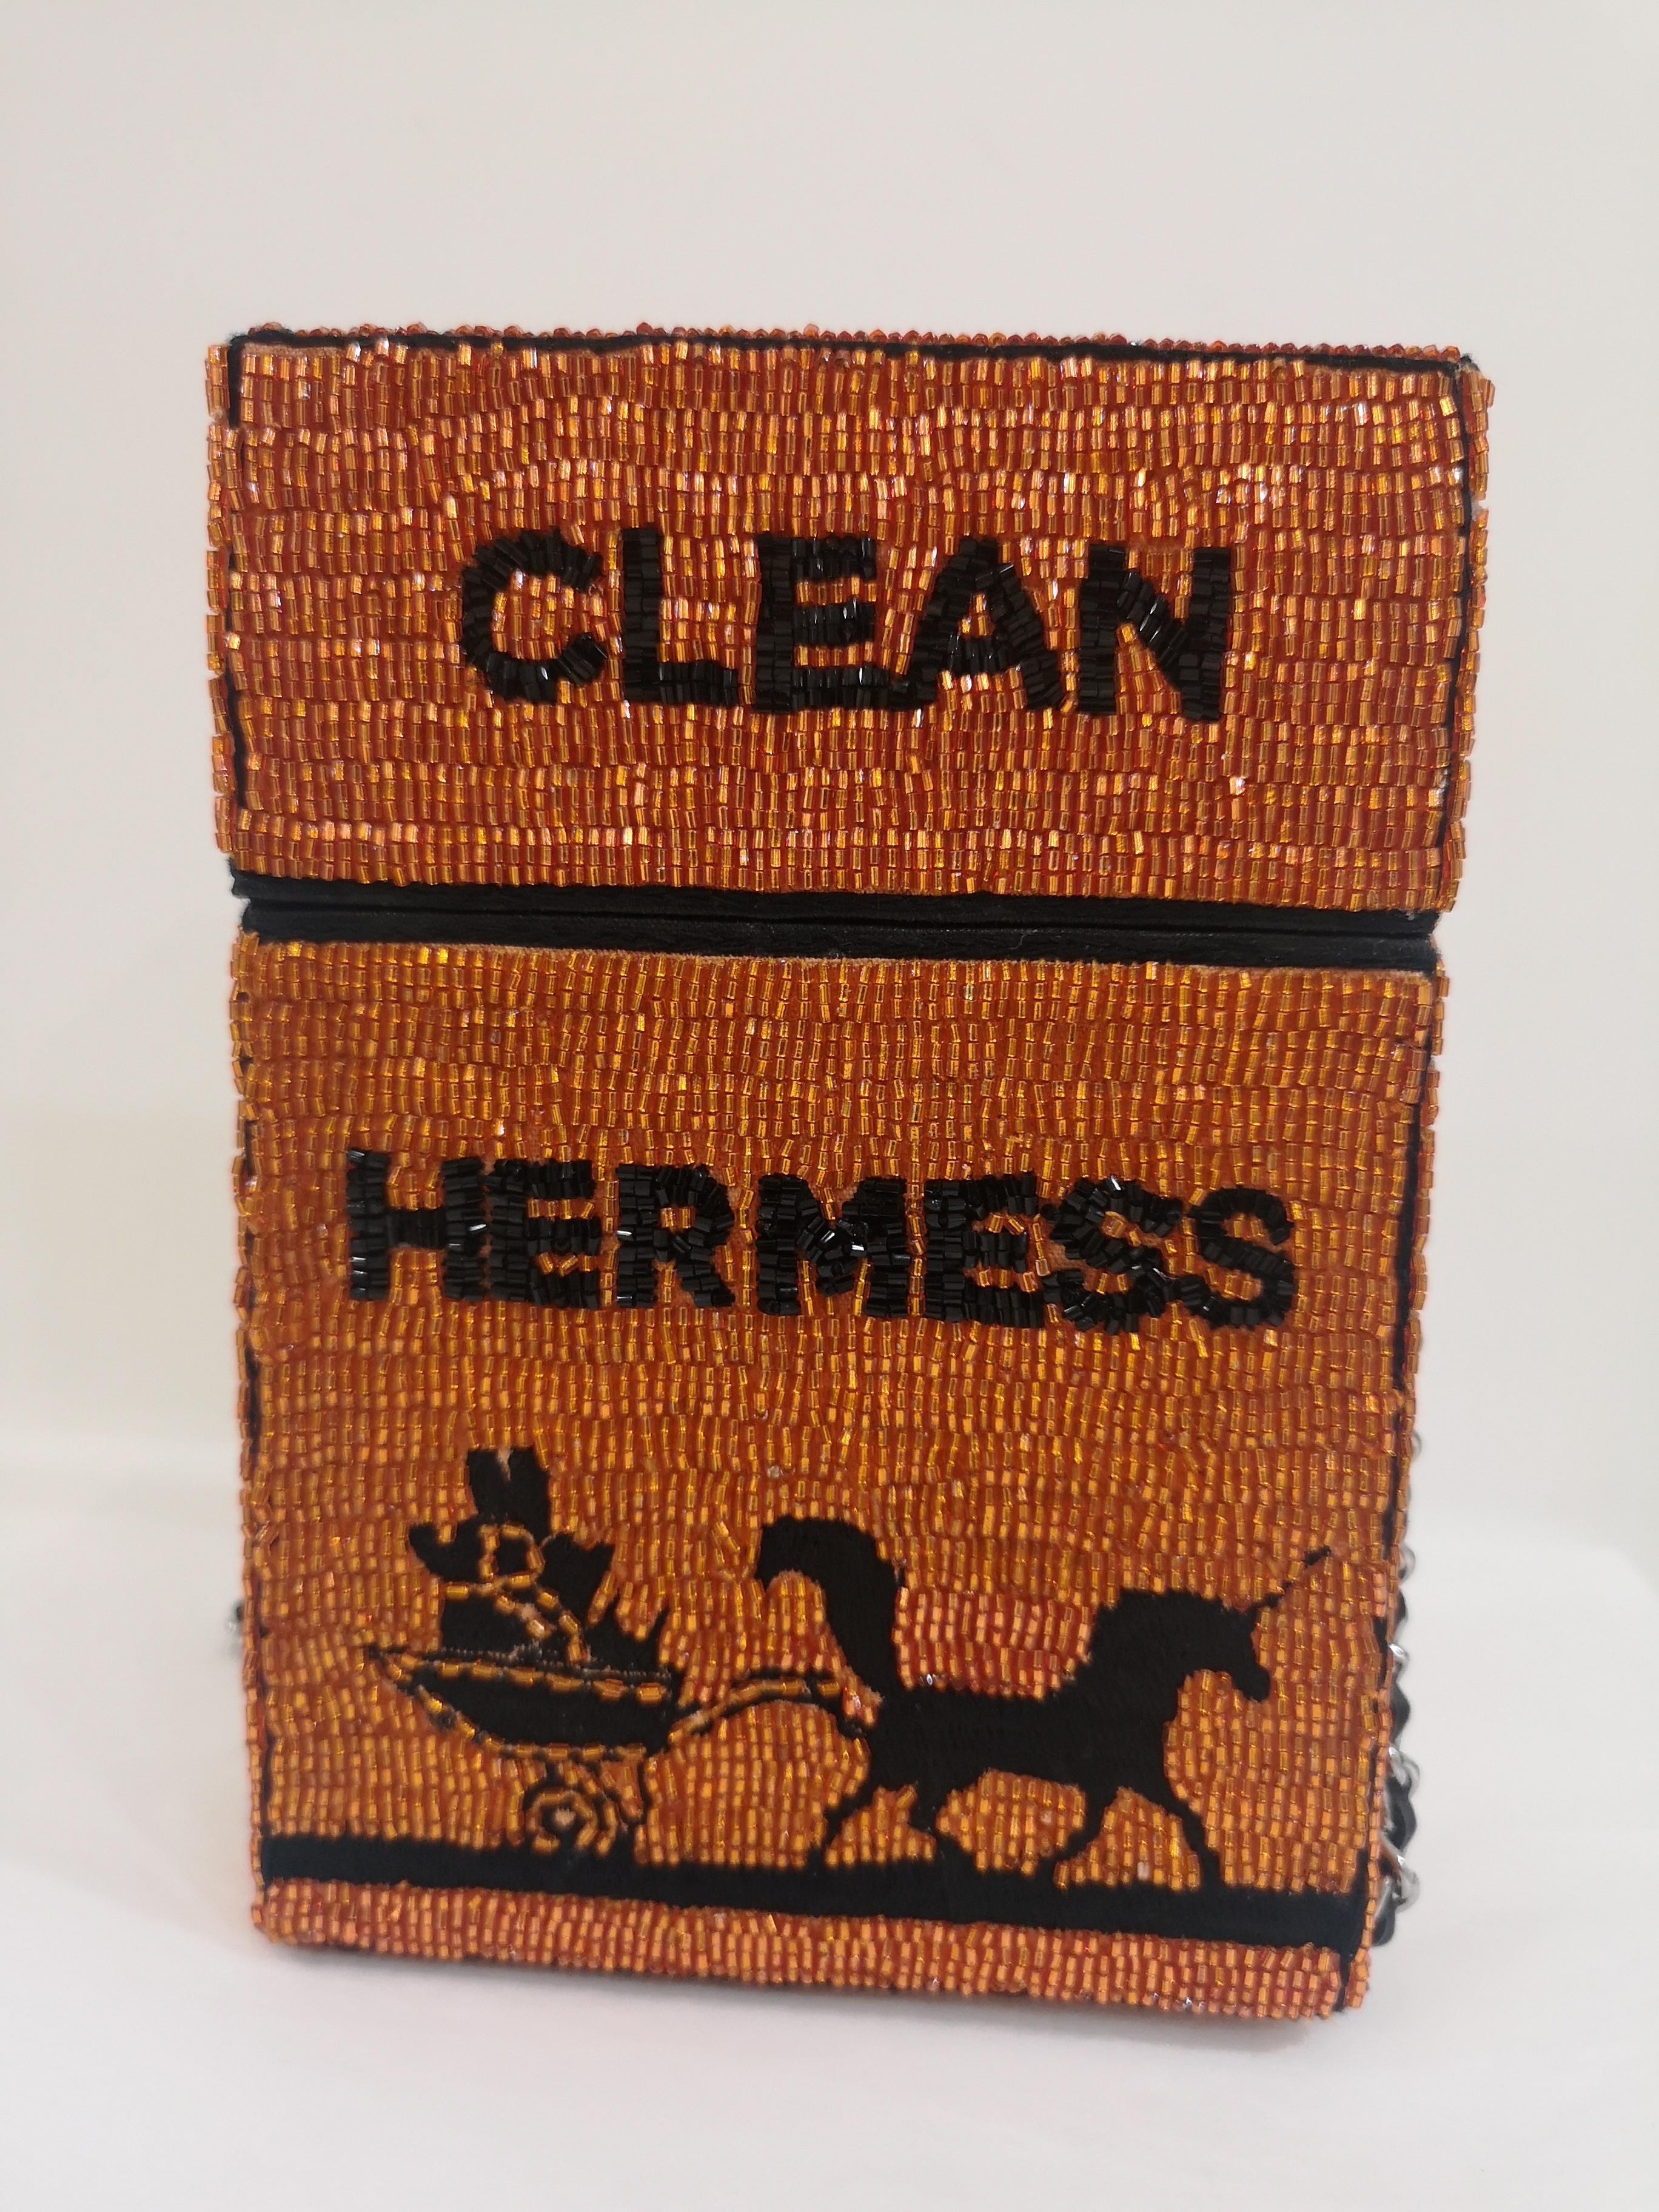 House of Muamua orange beads Clean hermess cigarette bag
Size: 20cm x 14cm x 6cm
totally hand-beaded
